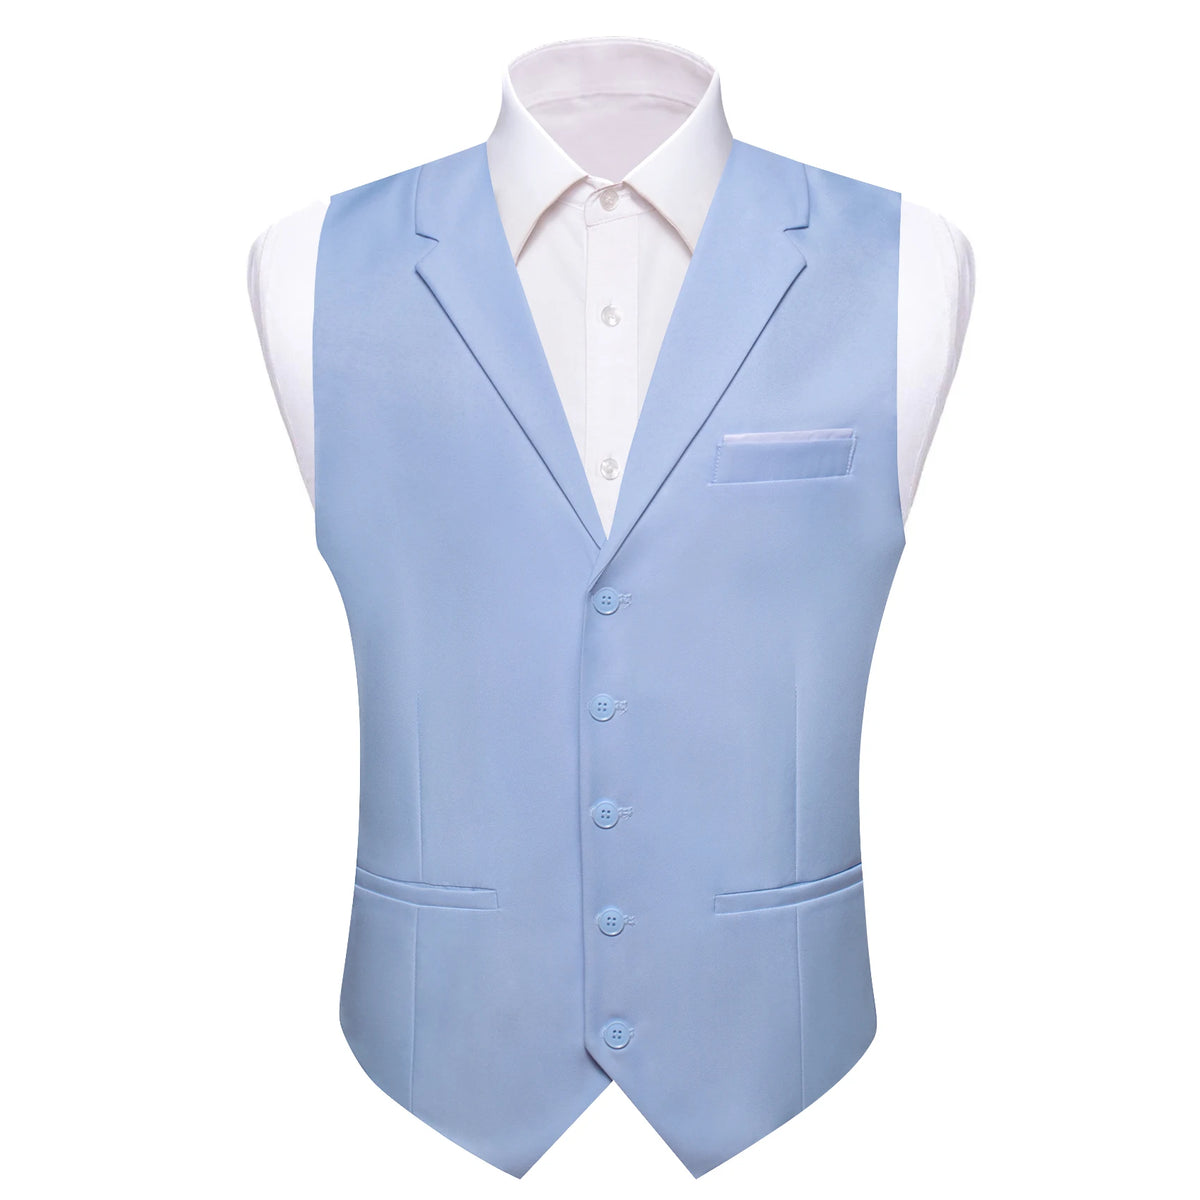 a light blue vest with a white shirt